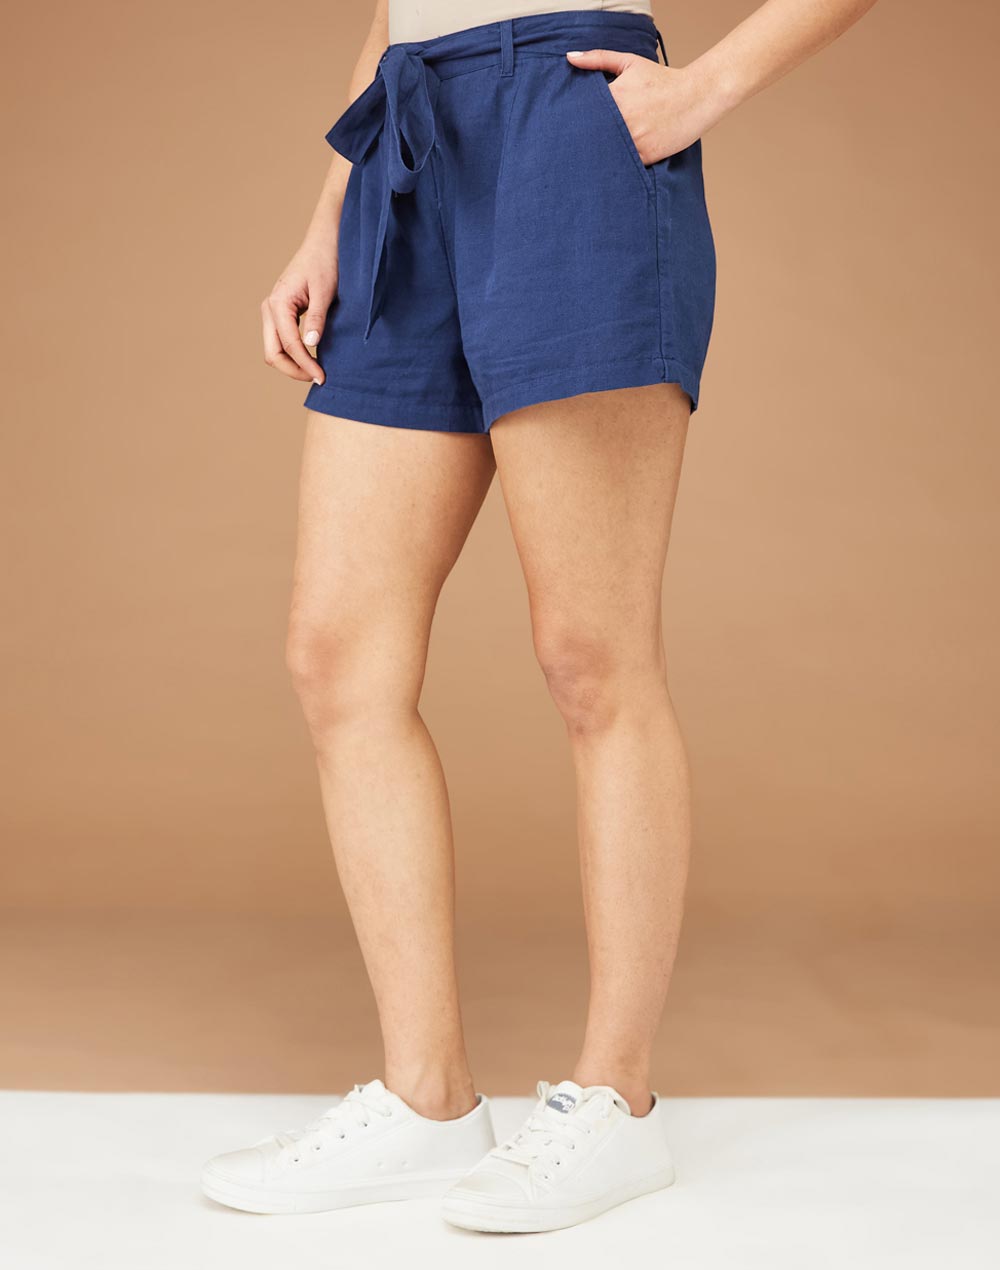 Women Shorts - Buy Shorts for Women Online in India